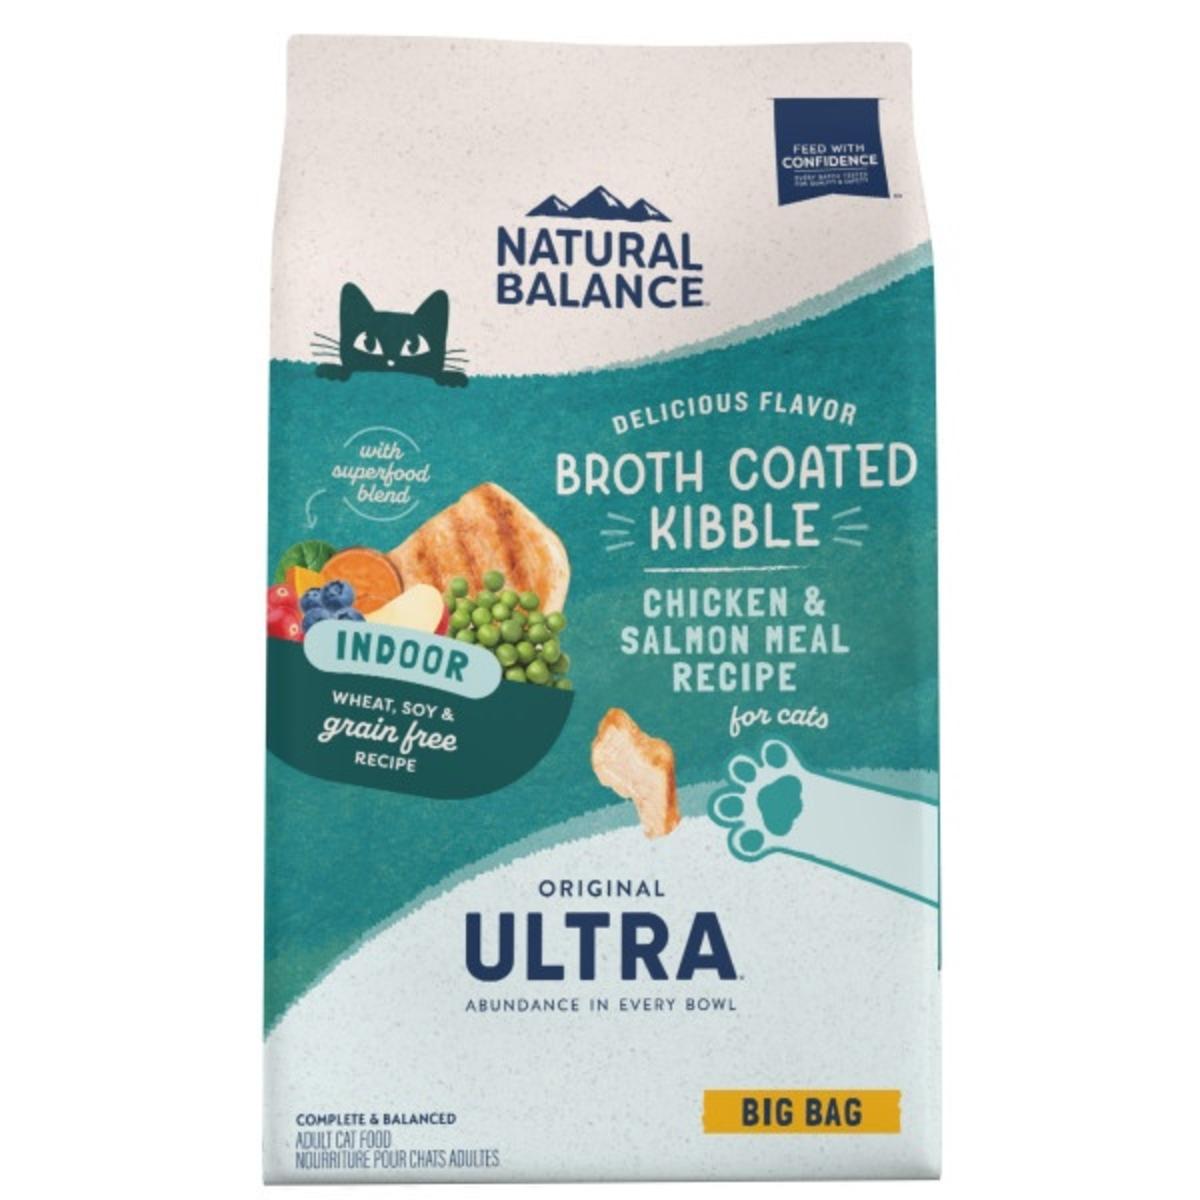 Natural Balance Original Ultra™ Indoor Chicken & Salmon Meal Formula